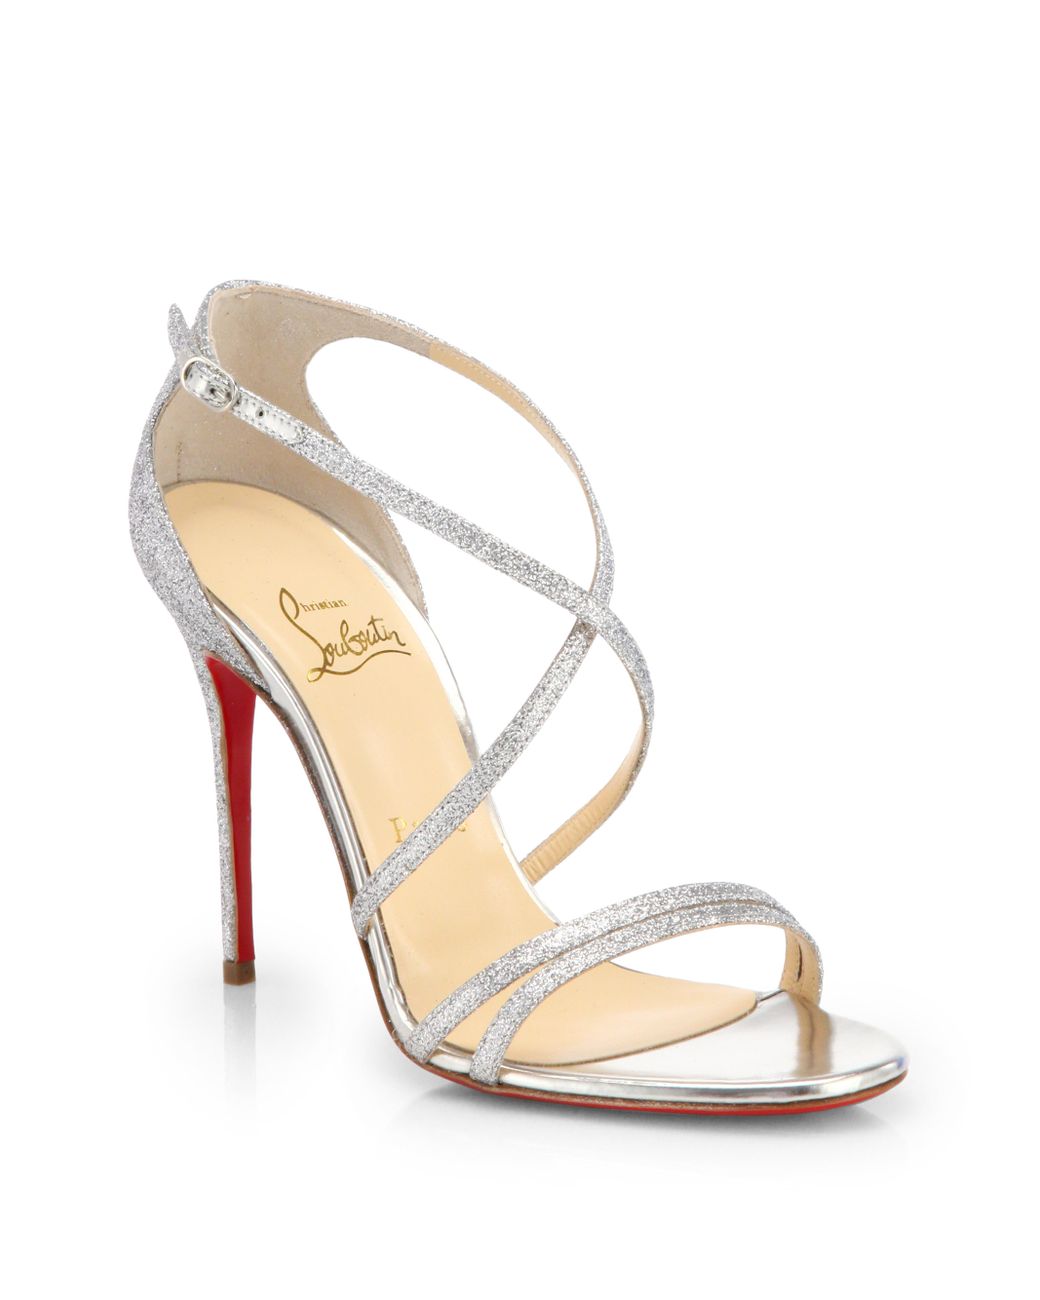 Christian Louboutin Gwynitta Glitter Sandals in Metallic Lyst